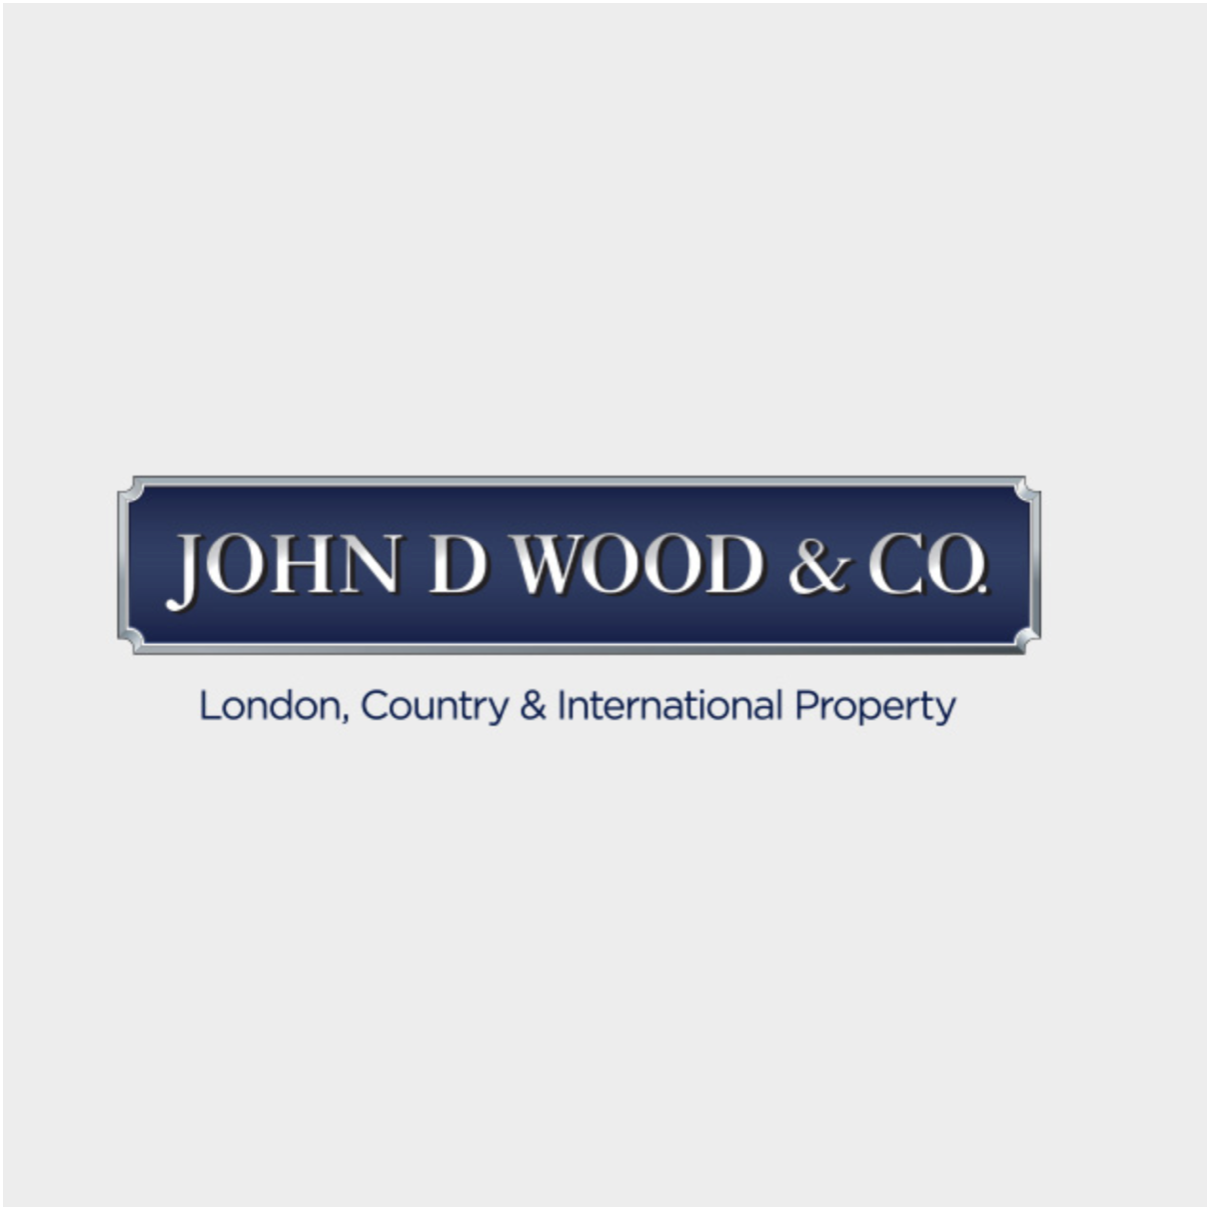 John D Wood & Co.